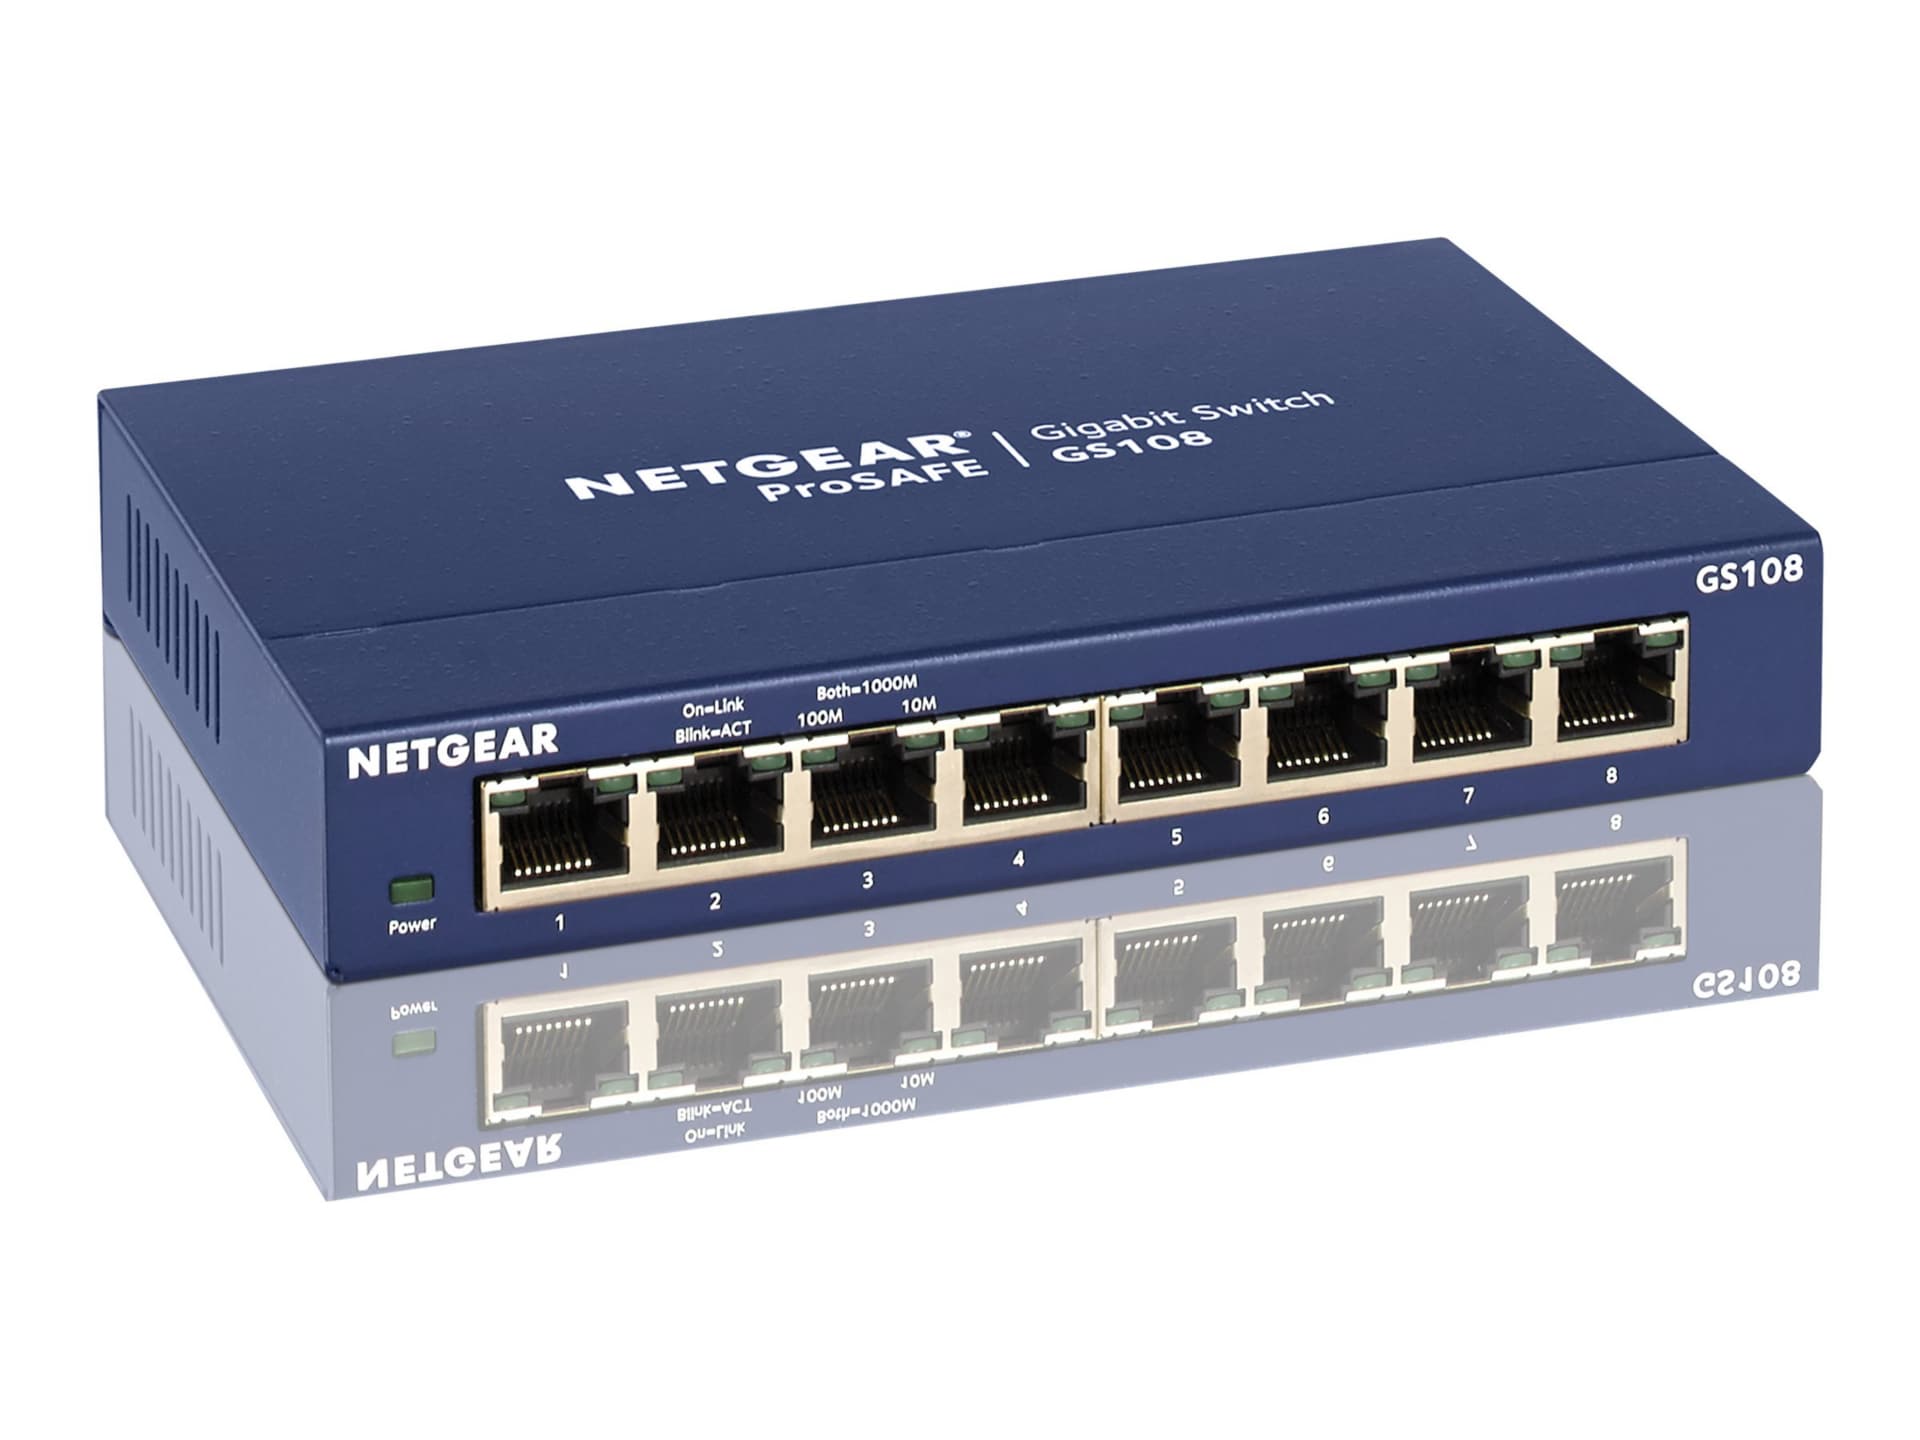 How to setup an Ethernet Switch? NETGEAR 5 Port GIGABIT Ethernet Switch 